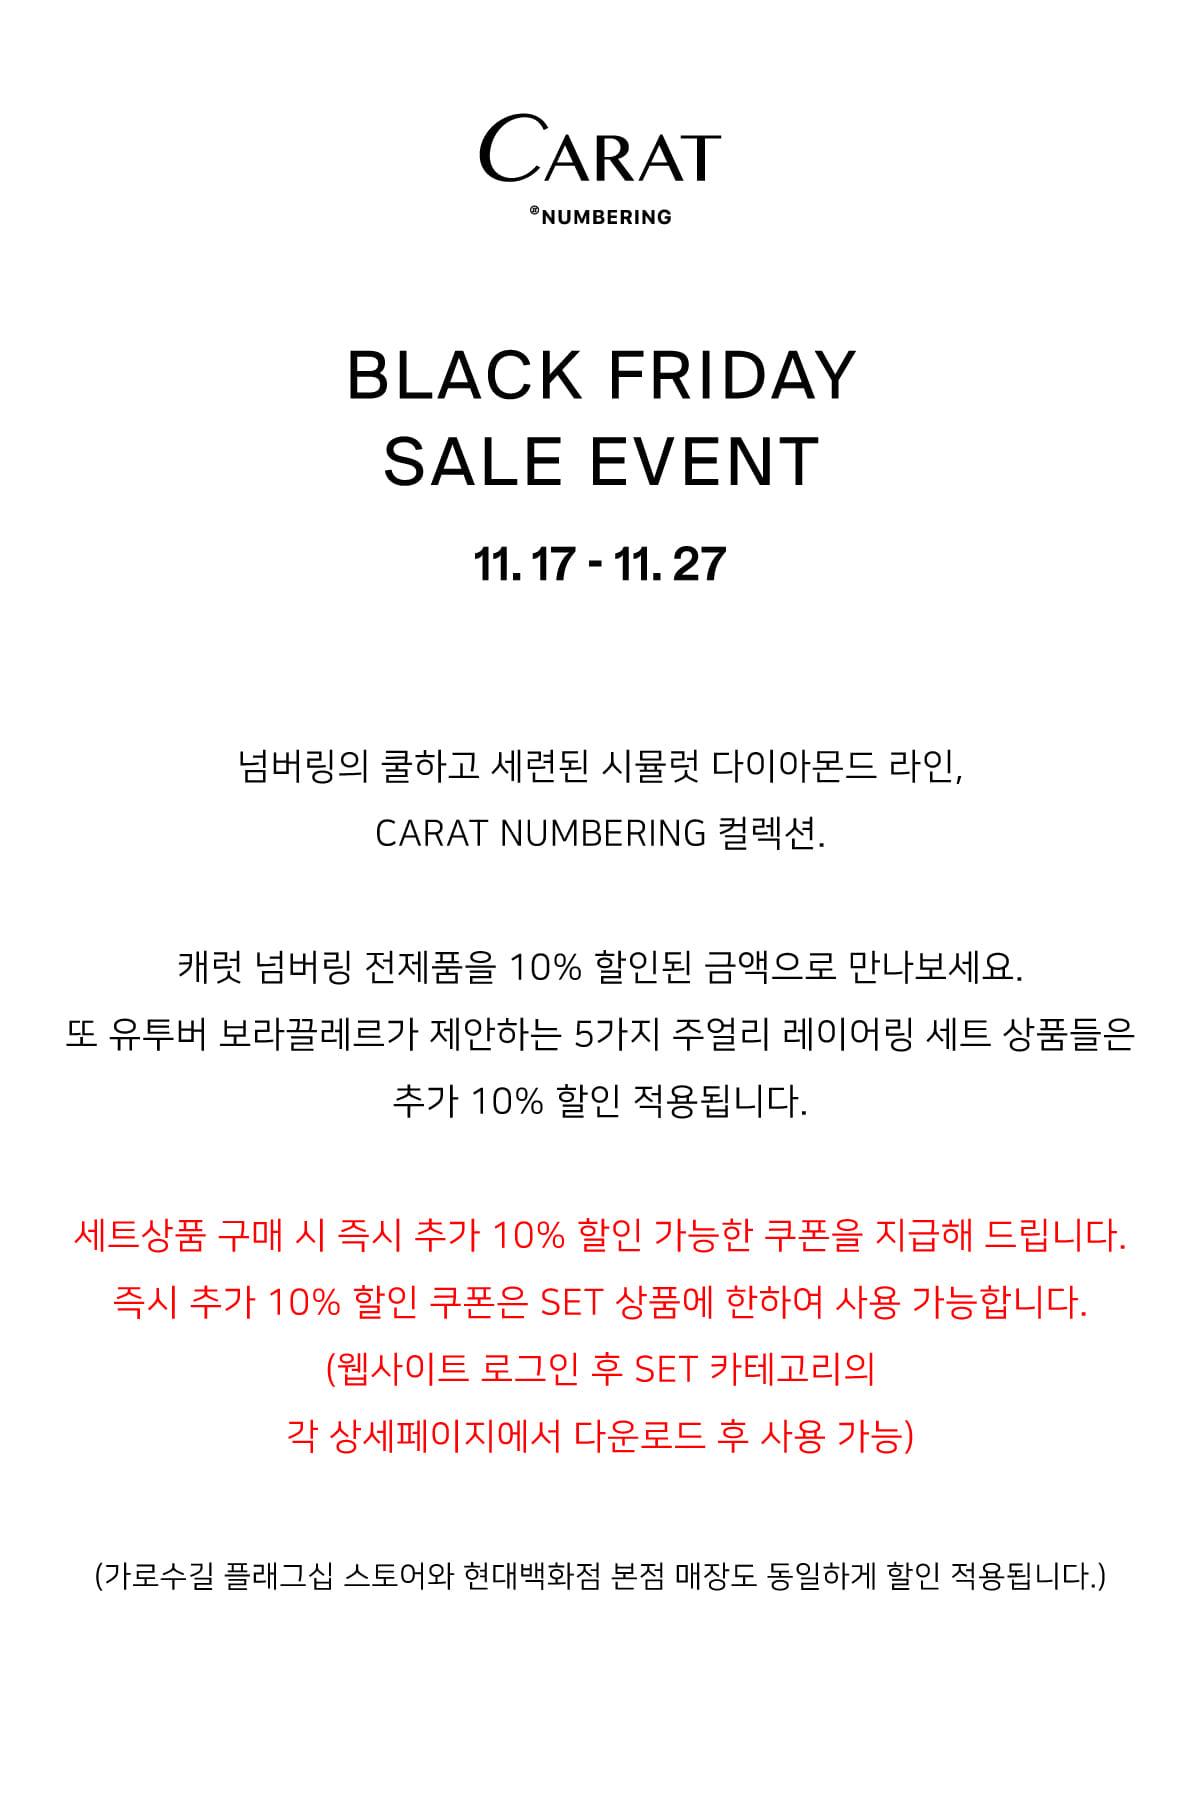 Black Friday Sale Event